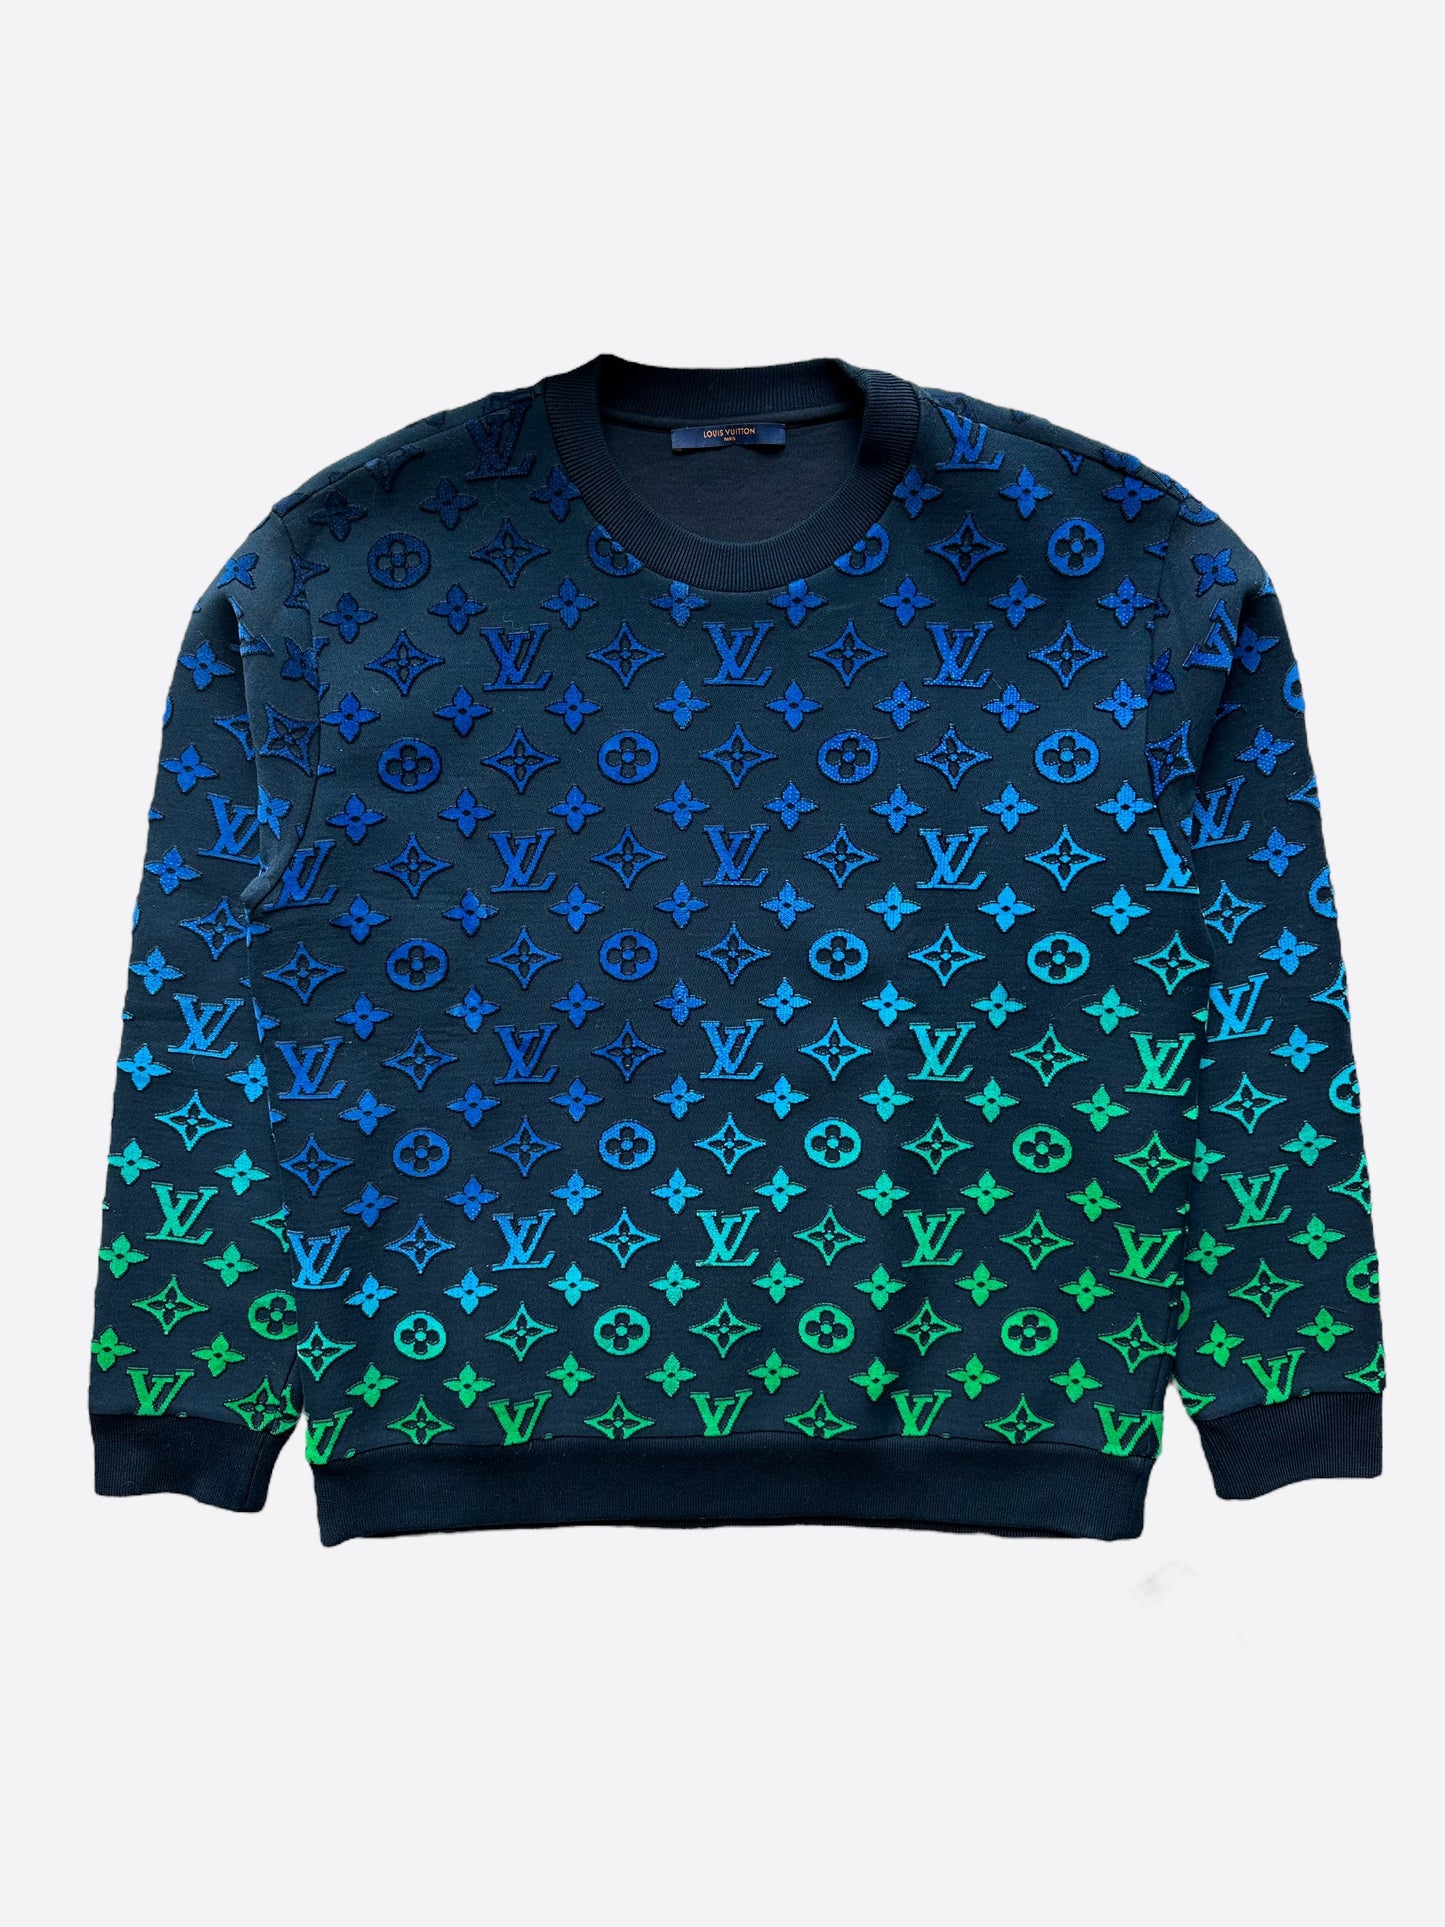 Genuine Louis Vuitton LV embroidery bicolor sweater L black blue green